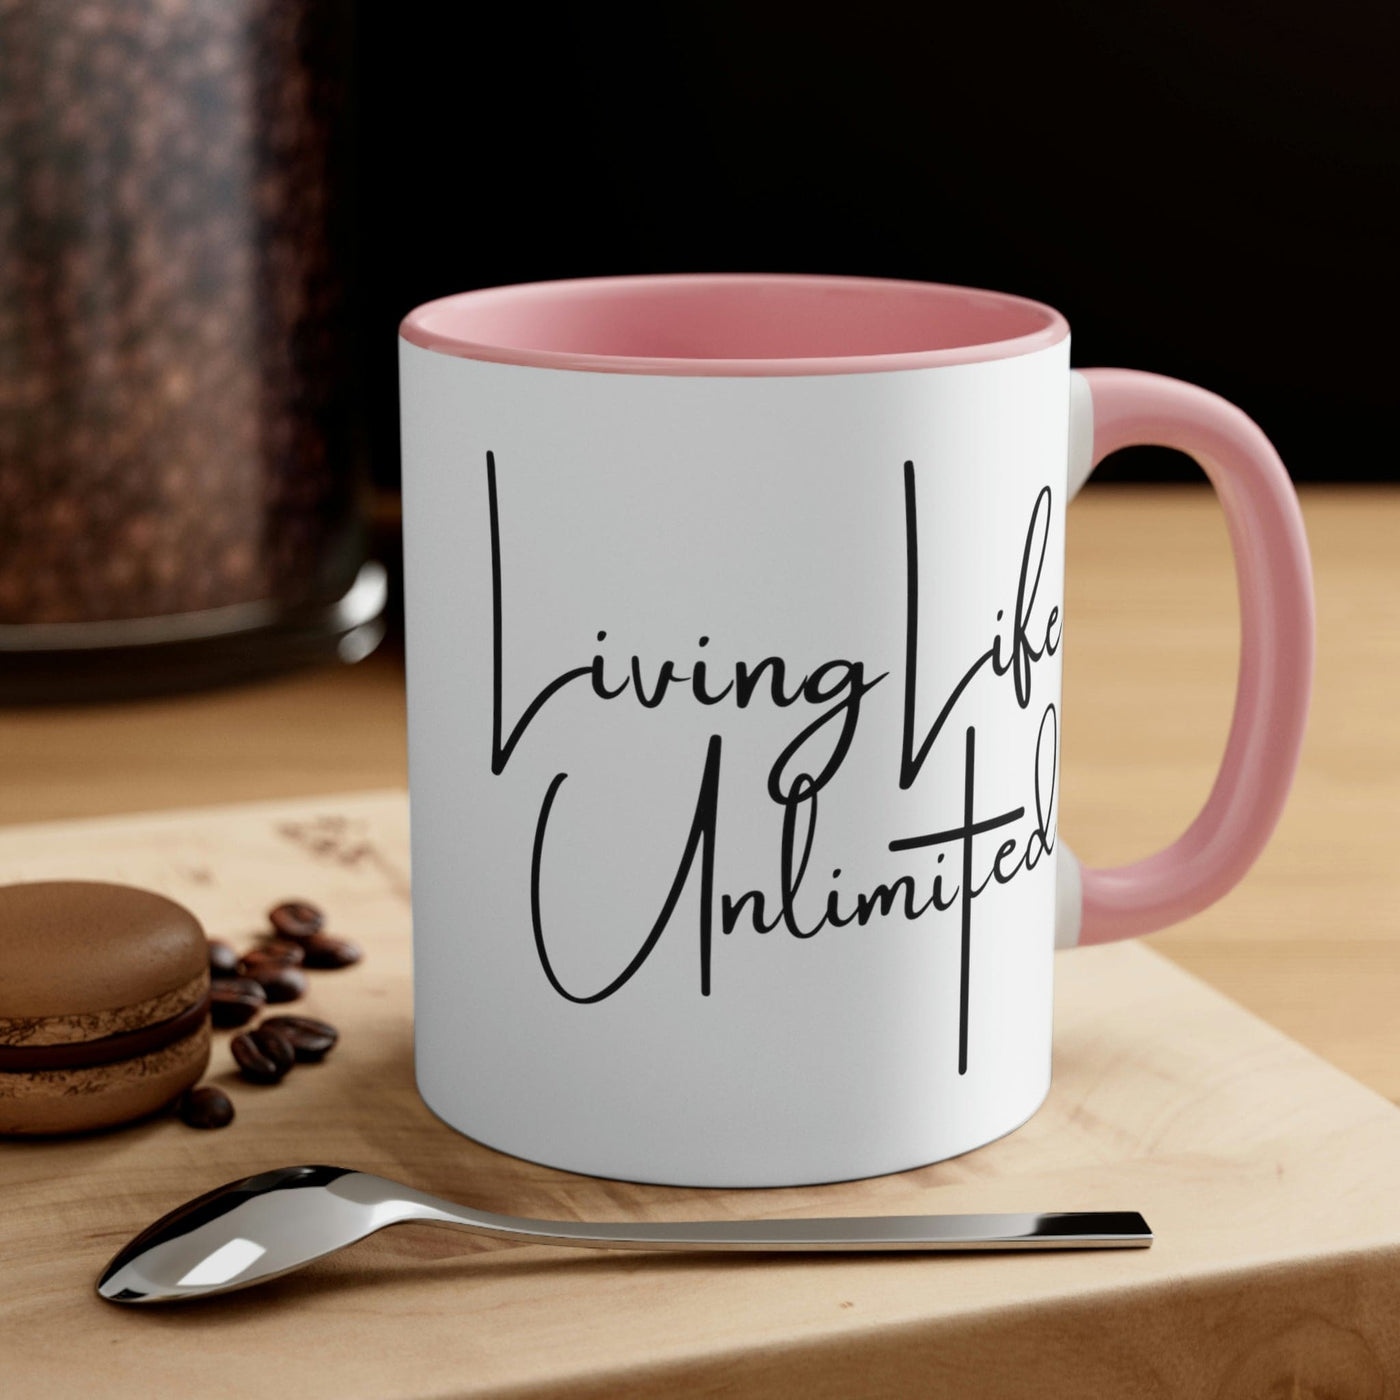 Two-tone Accent Ceramic Mug 11oz Living Life Unlimited - Inspirational